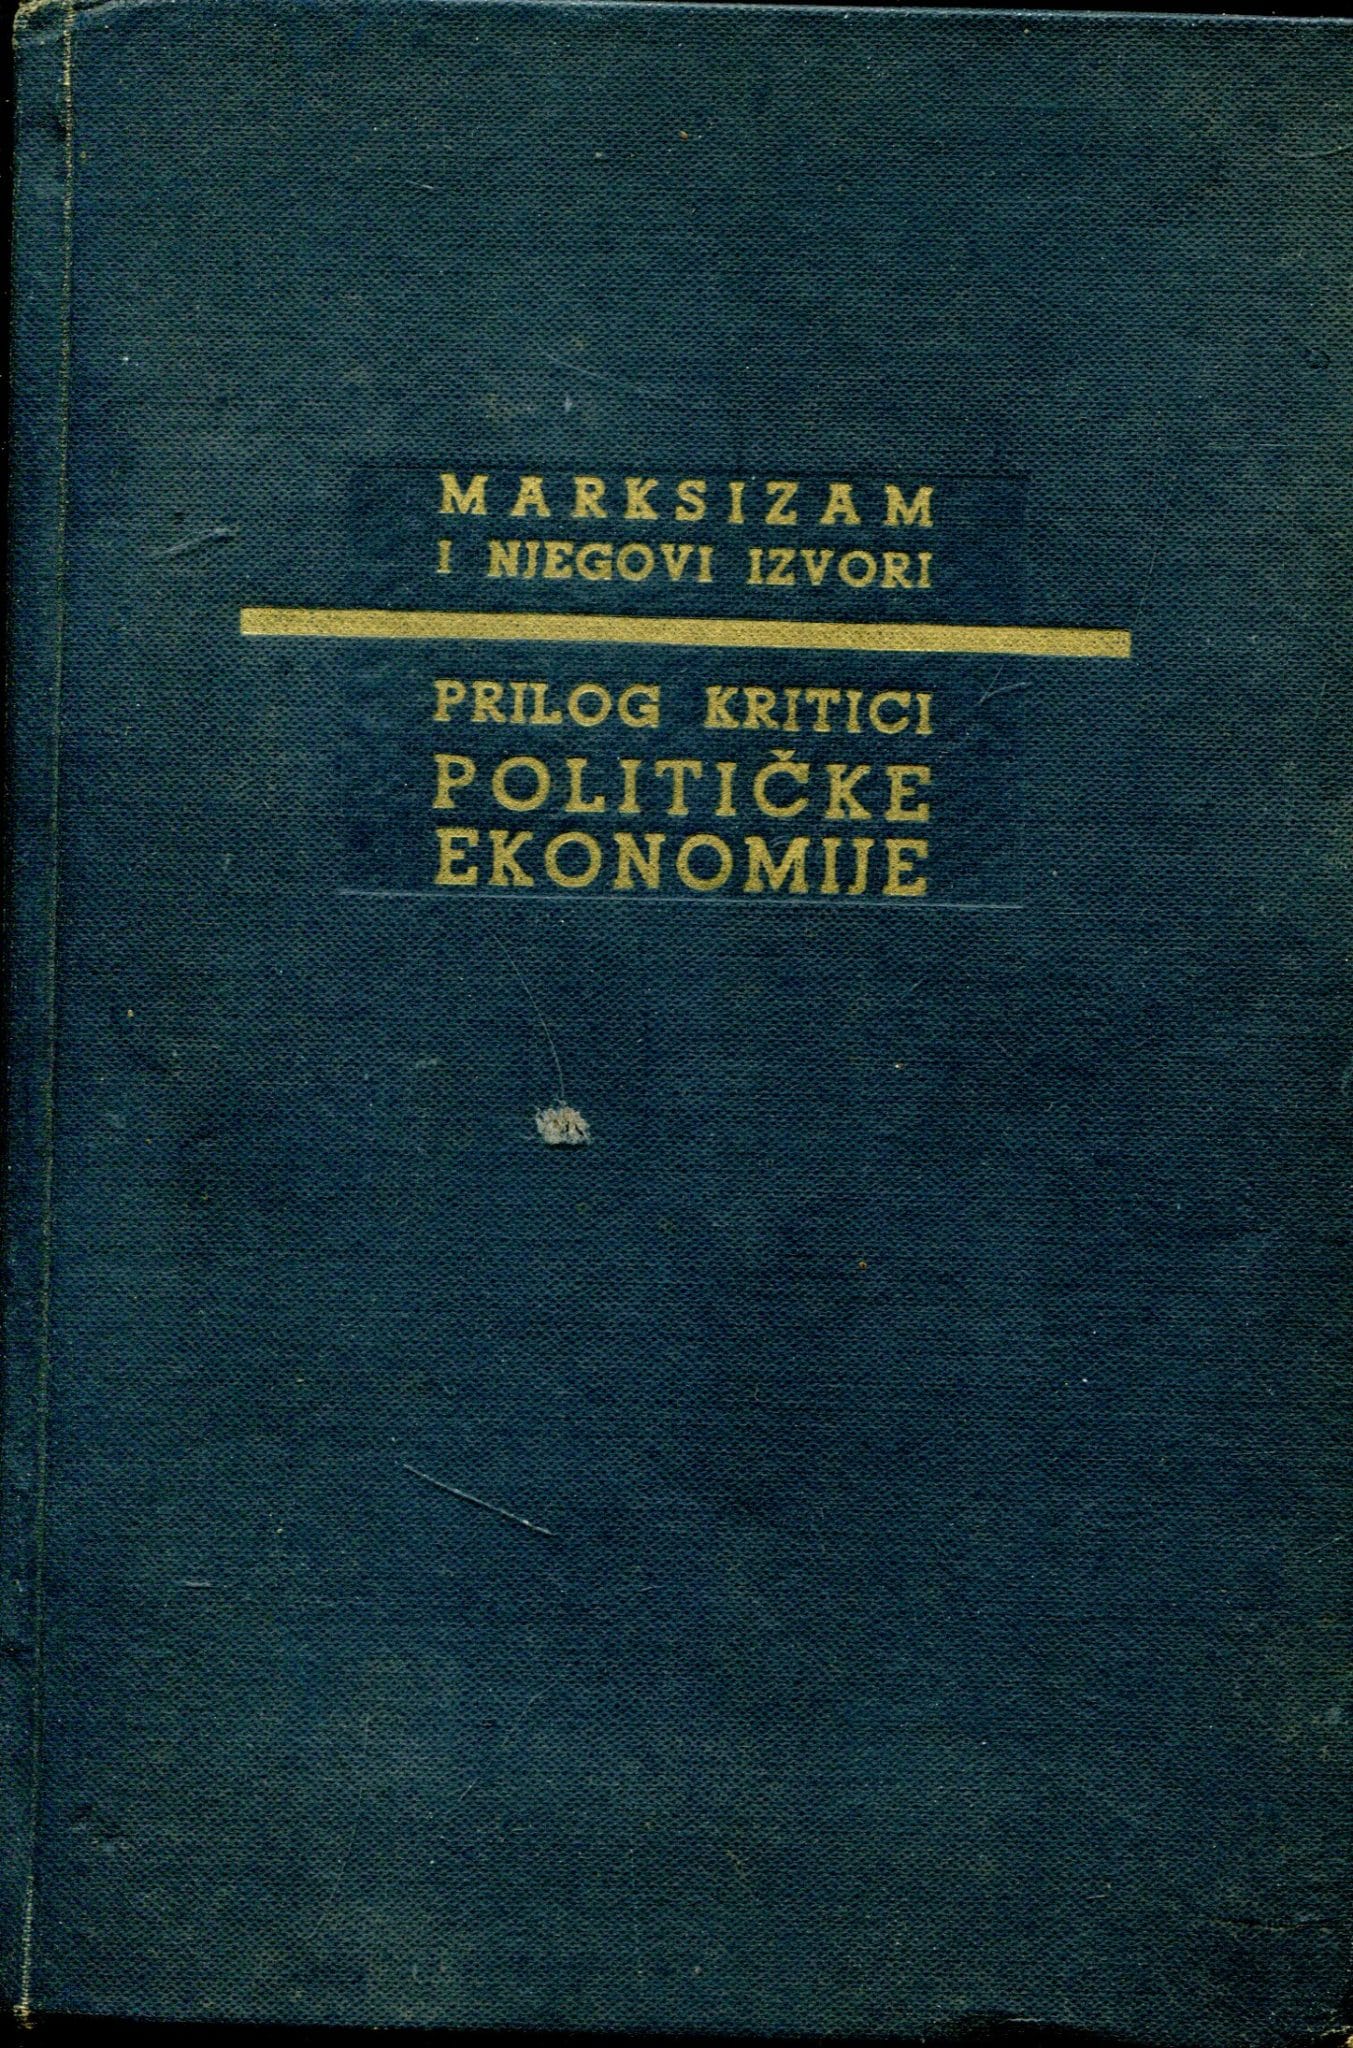 Prilog kritici političke ekonomije Karl Marks